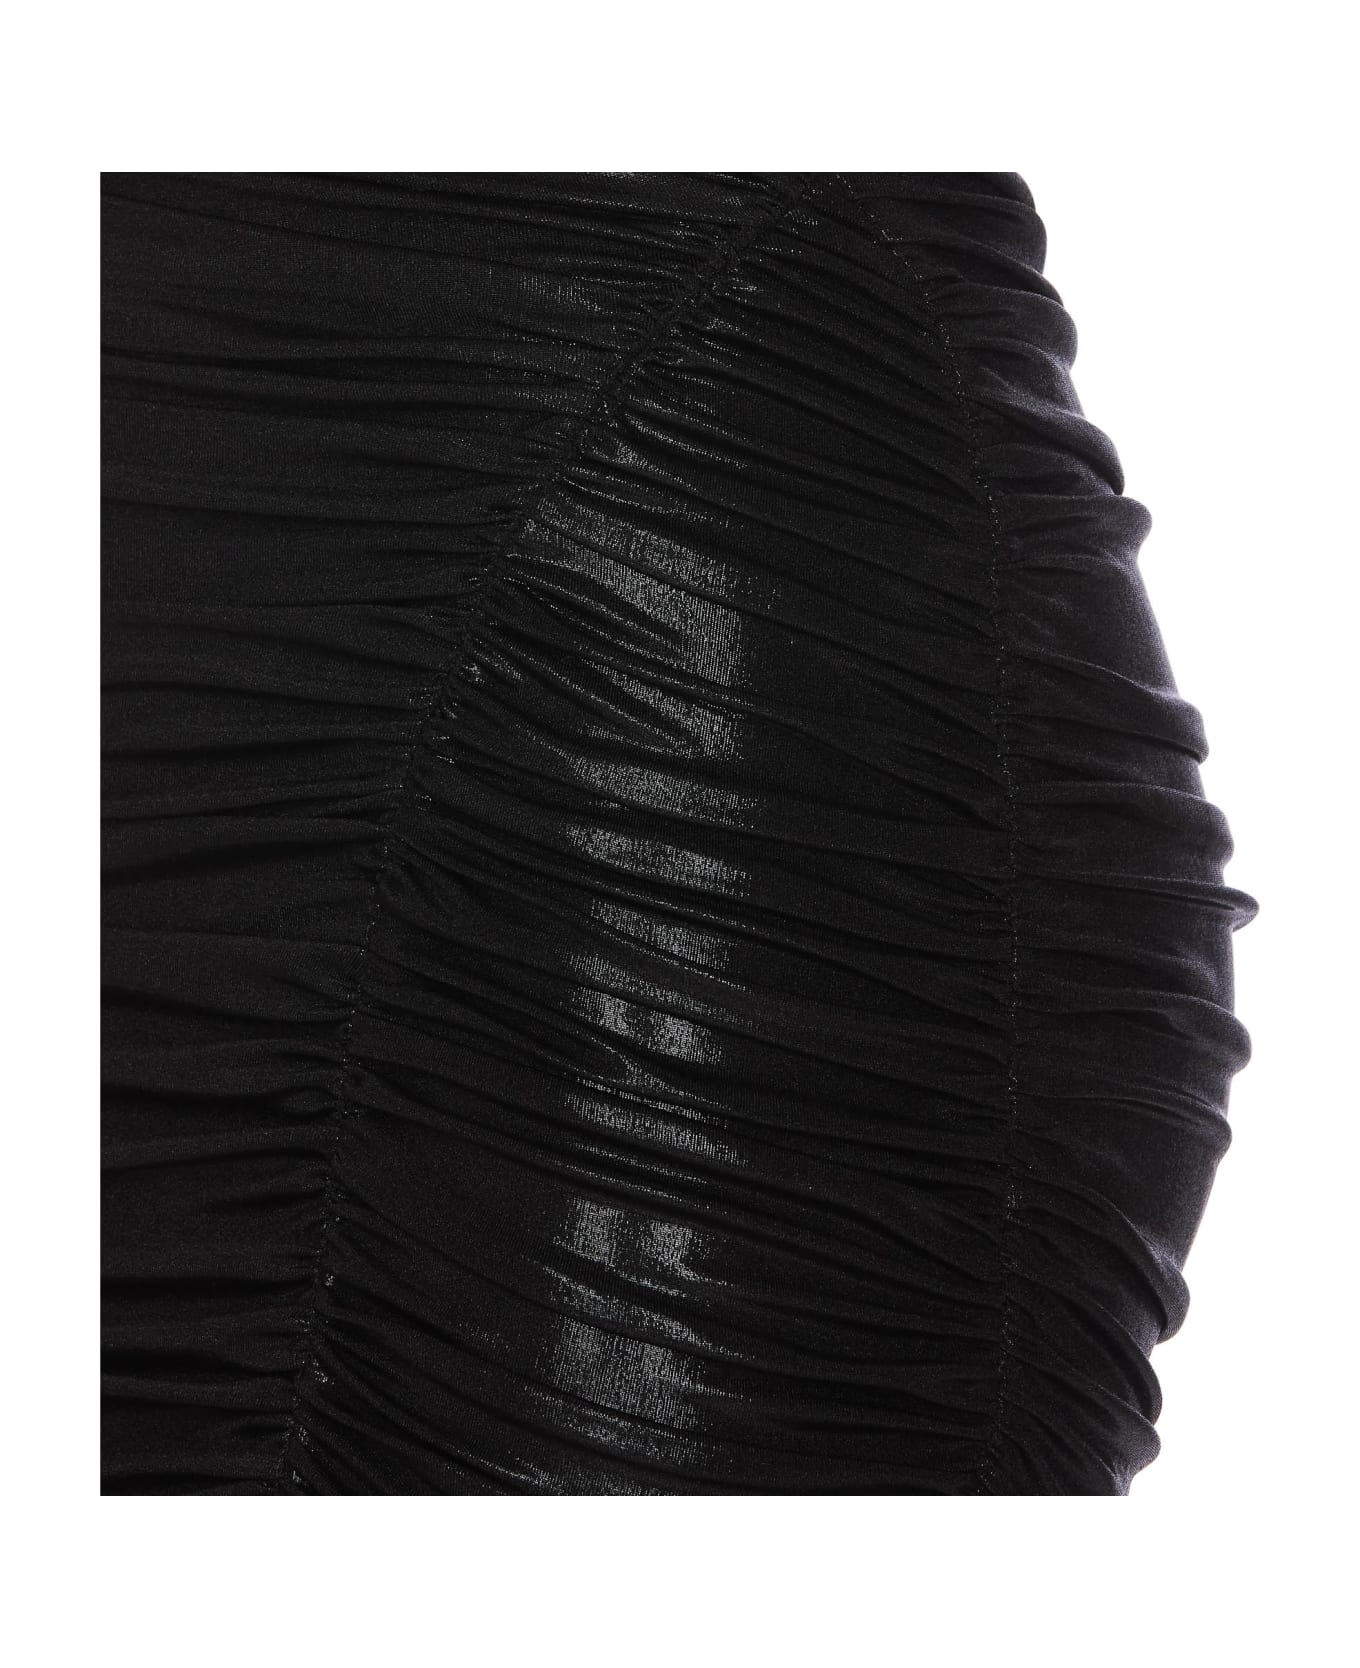 Elisabetta Franchi Mini Dress In Draped Metallic Jersey - Black